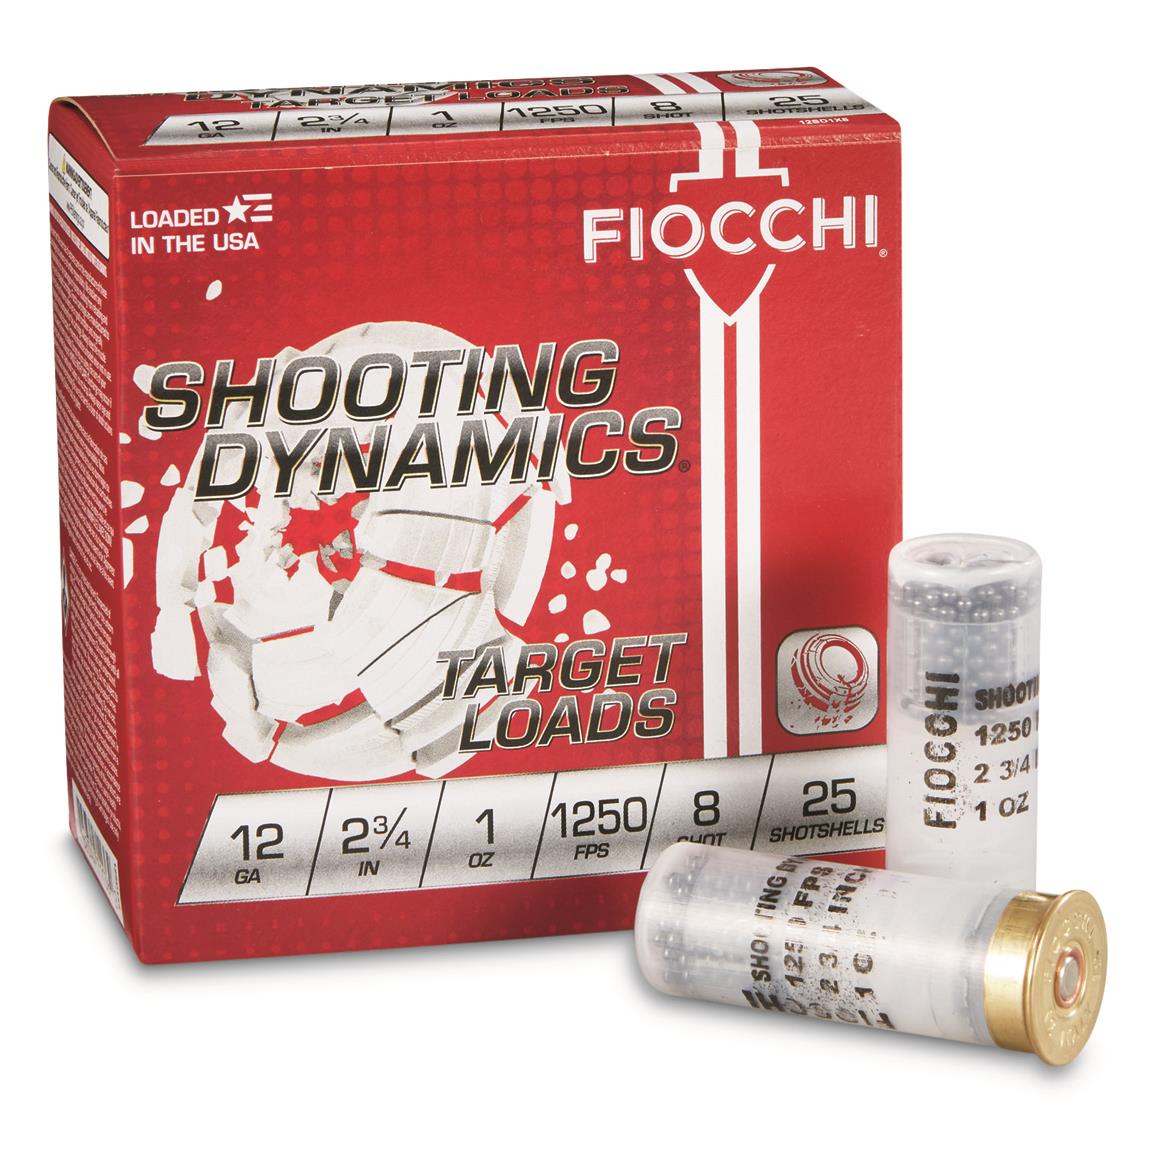 Fiocchi Shooting Dynamics Target Loads, 12 Gauge, 2 3/4", 1 oz., 250 Rounds